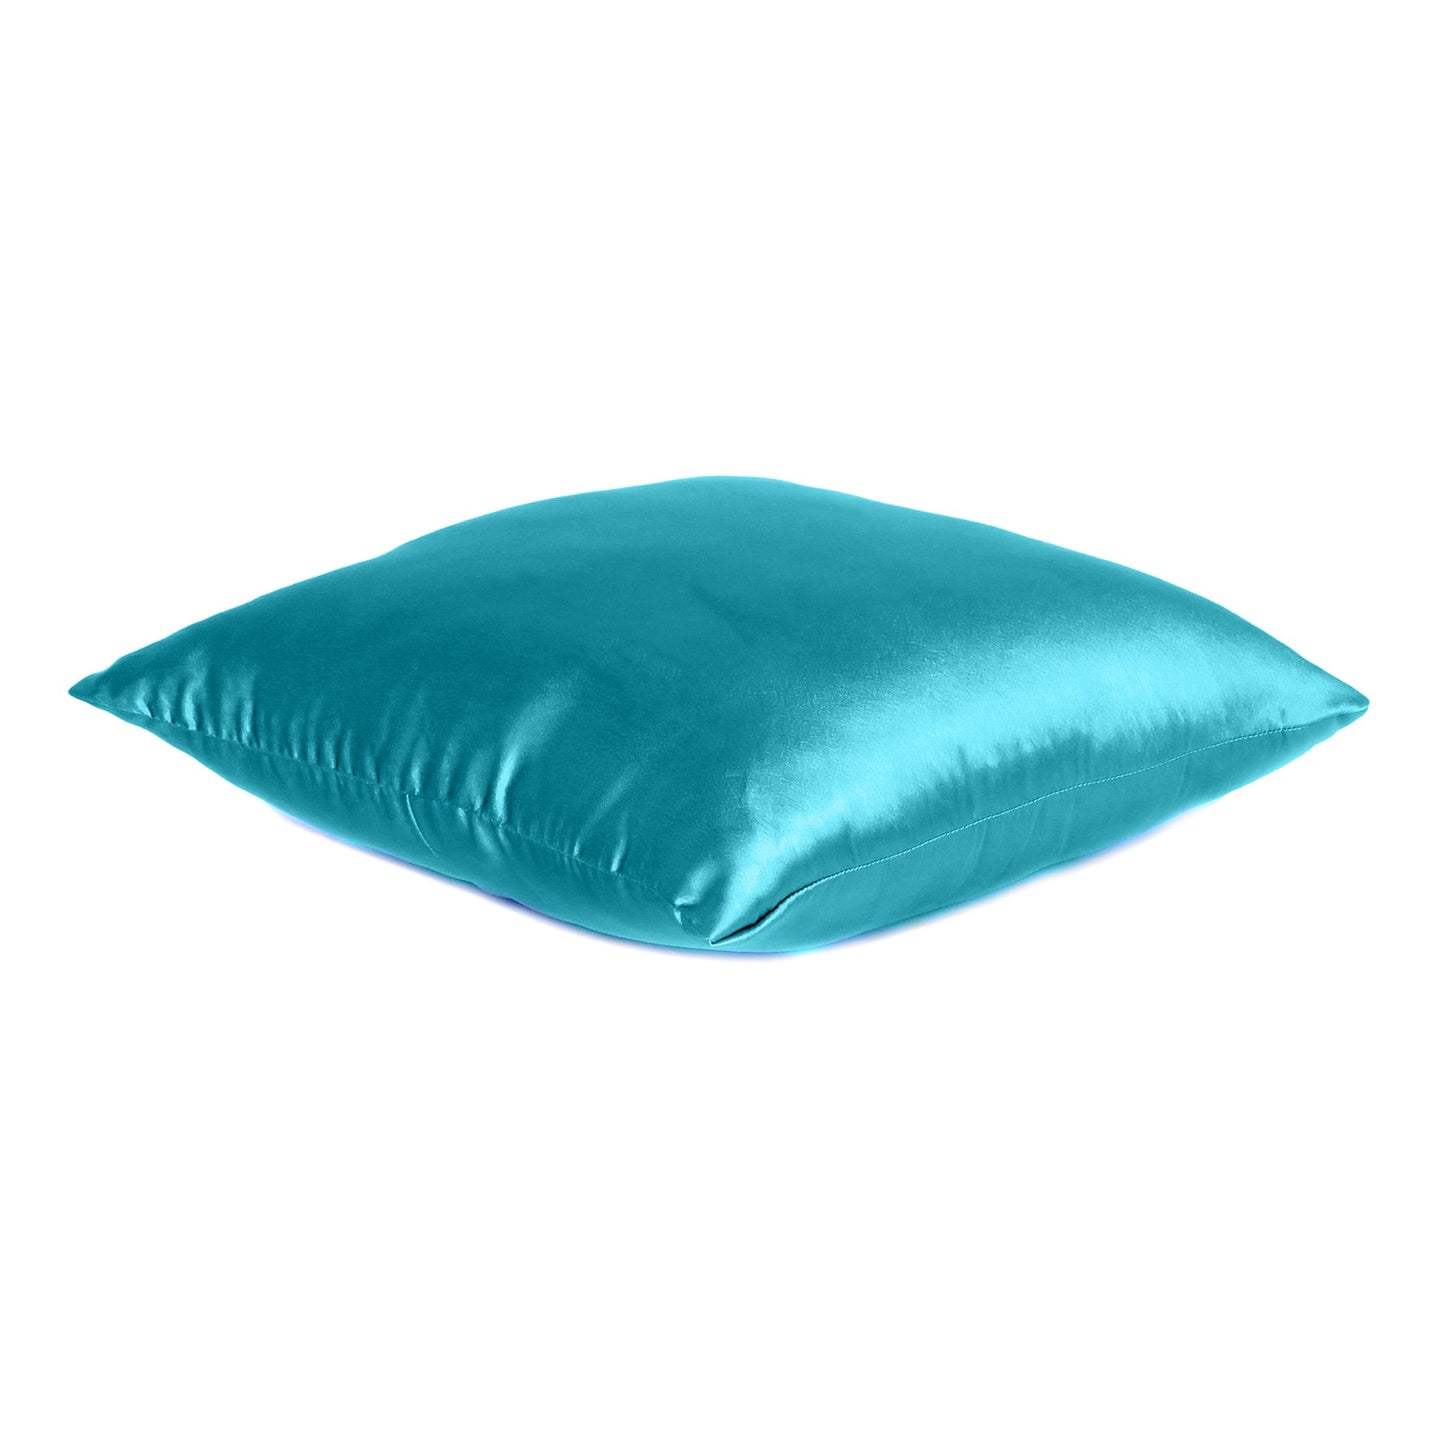 Corsair Blue Satin Silky Cushion Covers in Set of 2